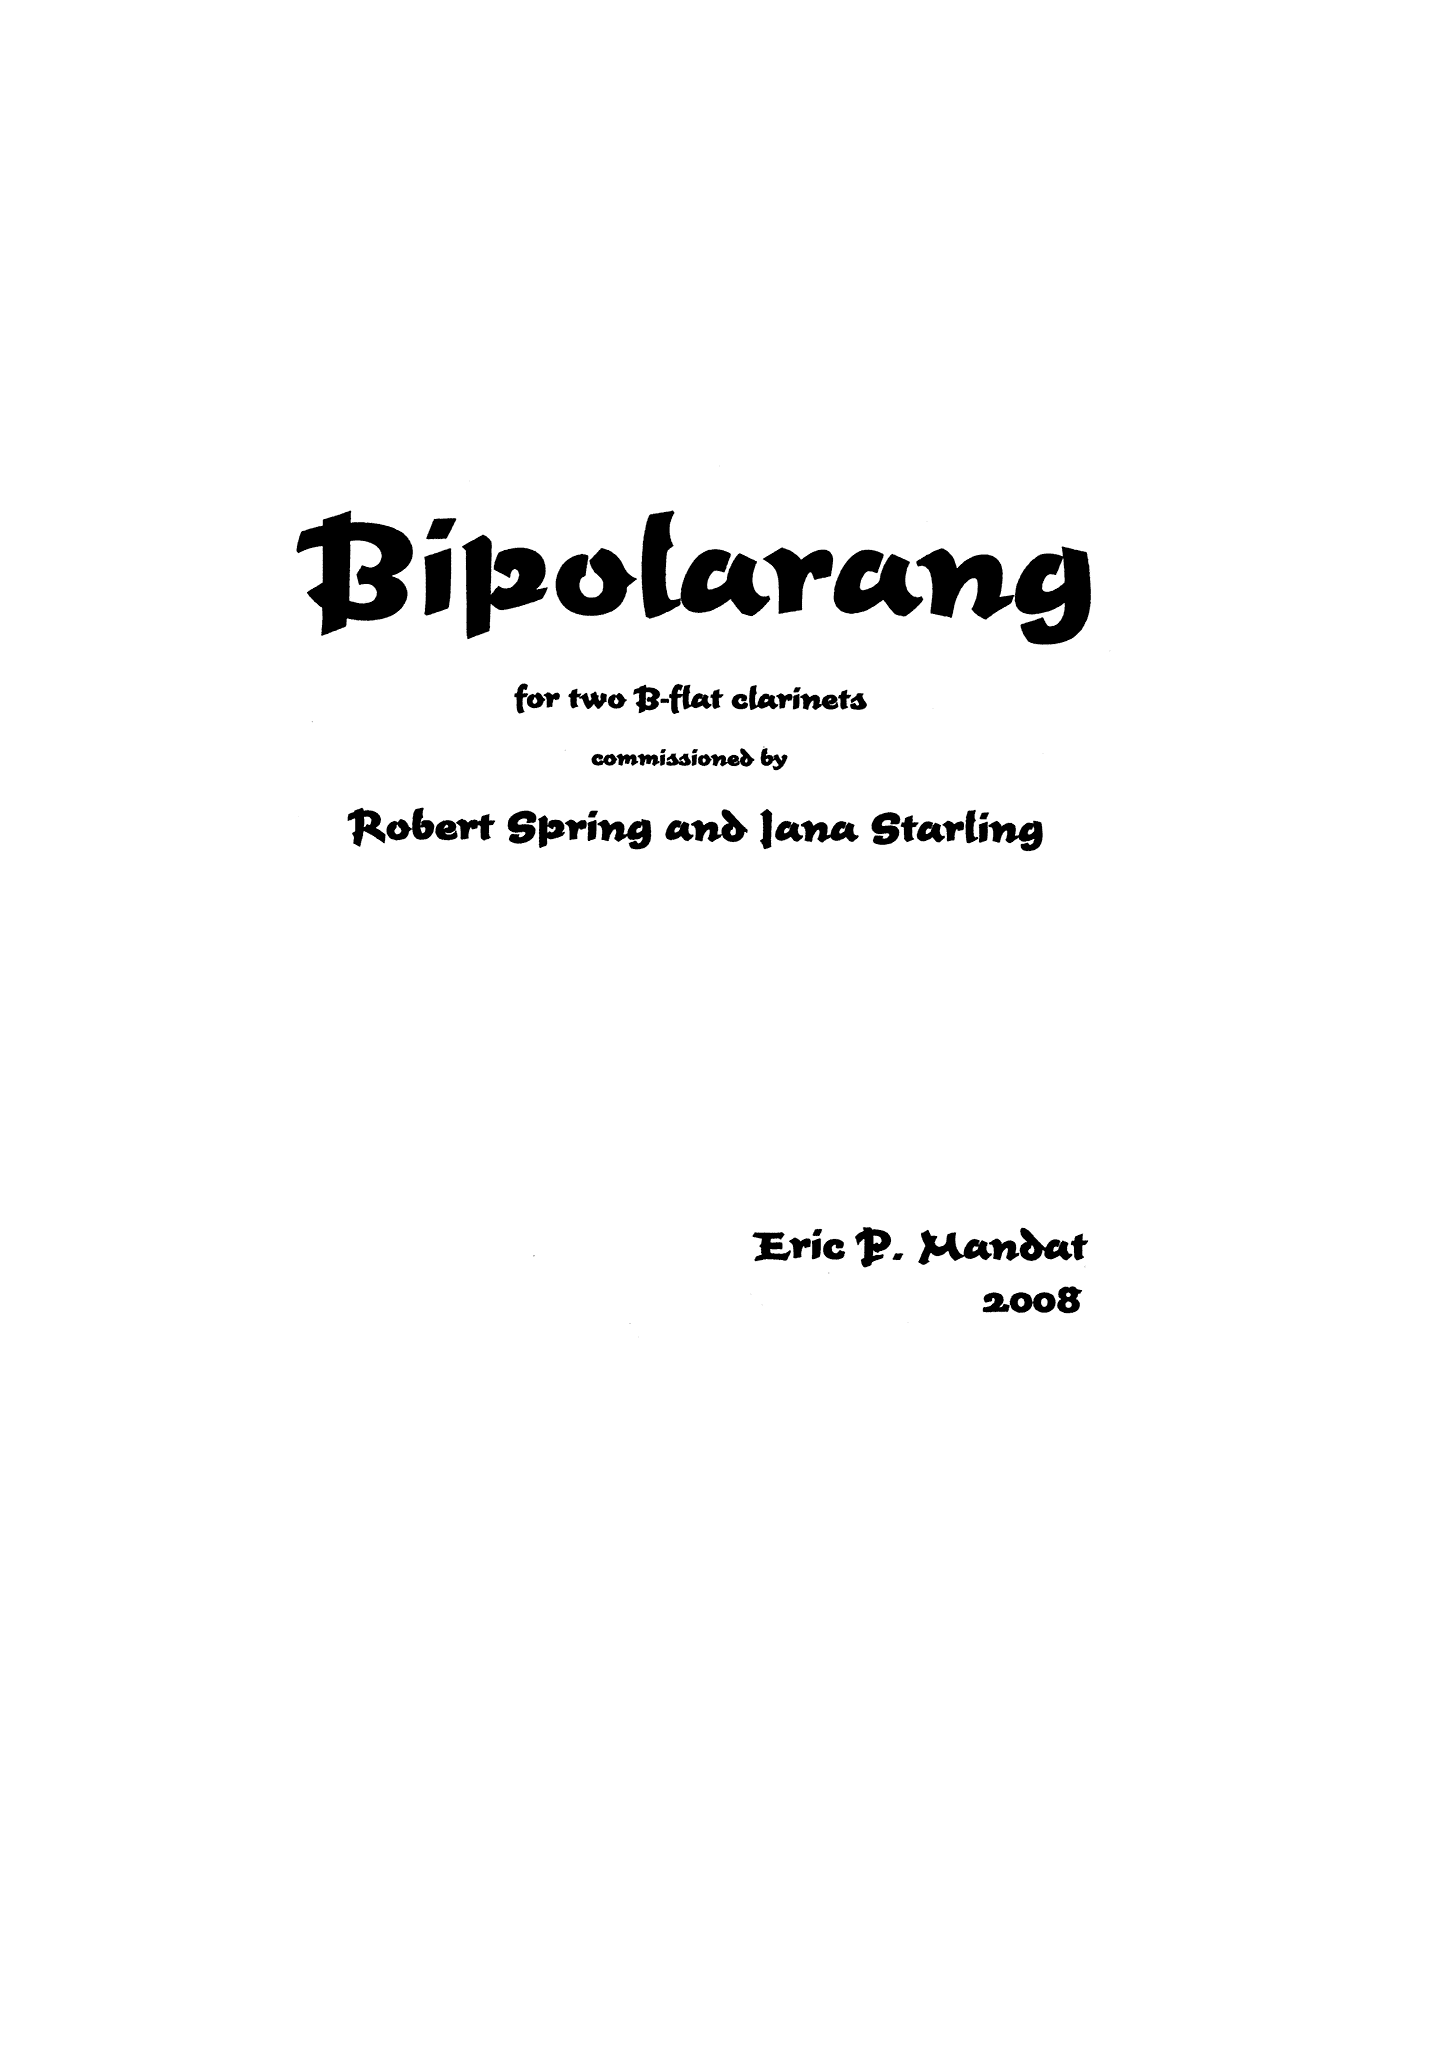 Eric Mandat Bipolarang clarinet duet cover